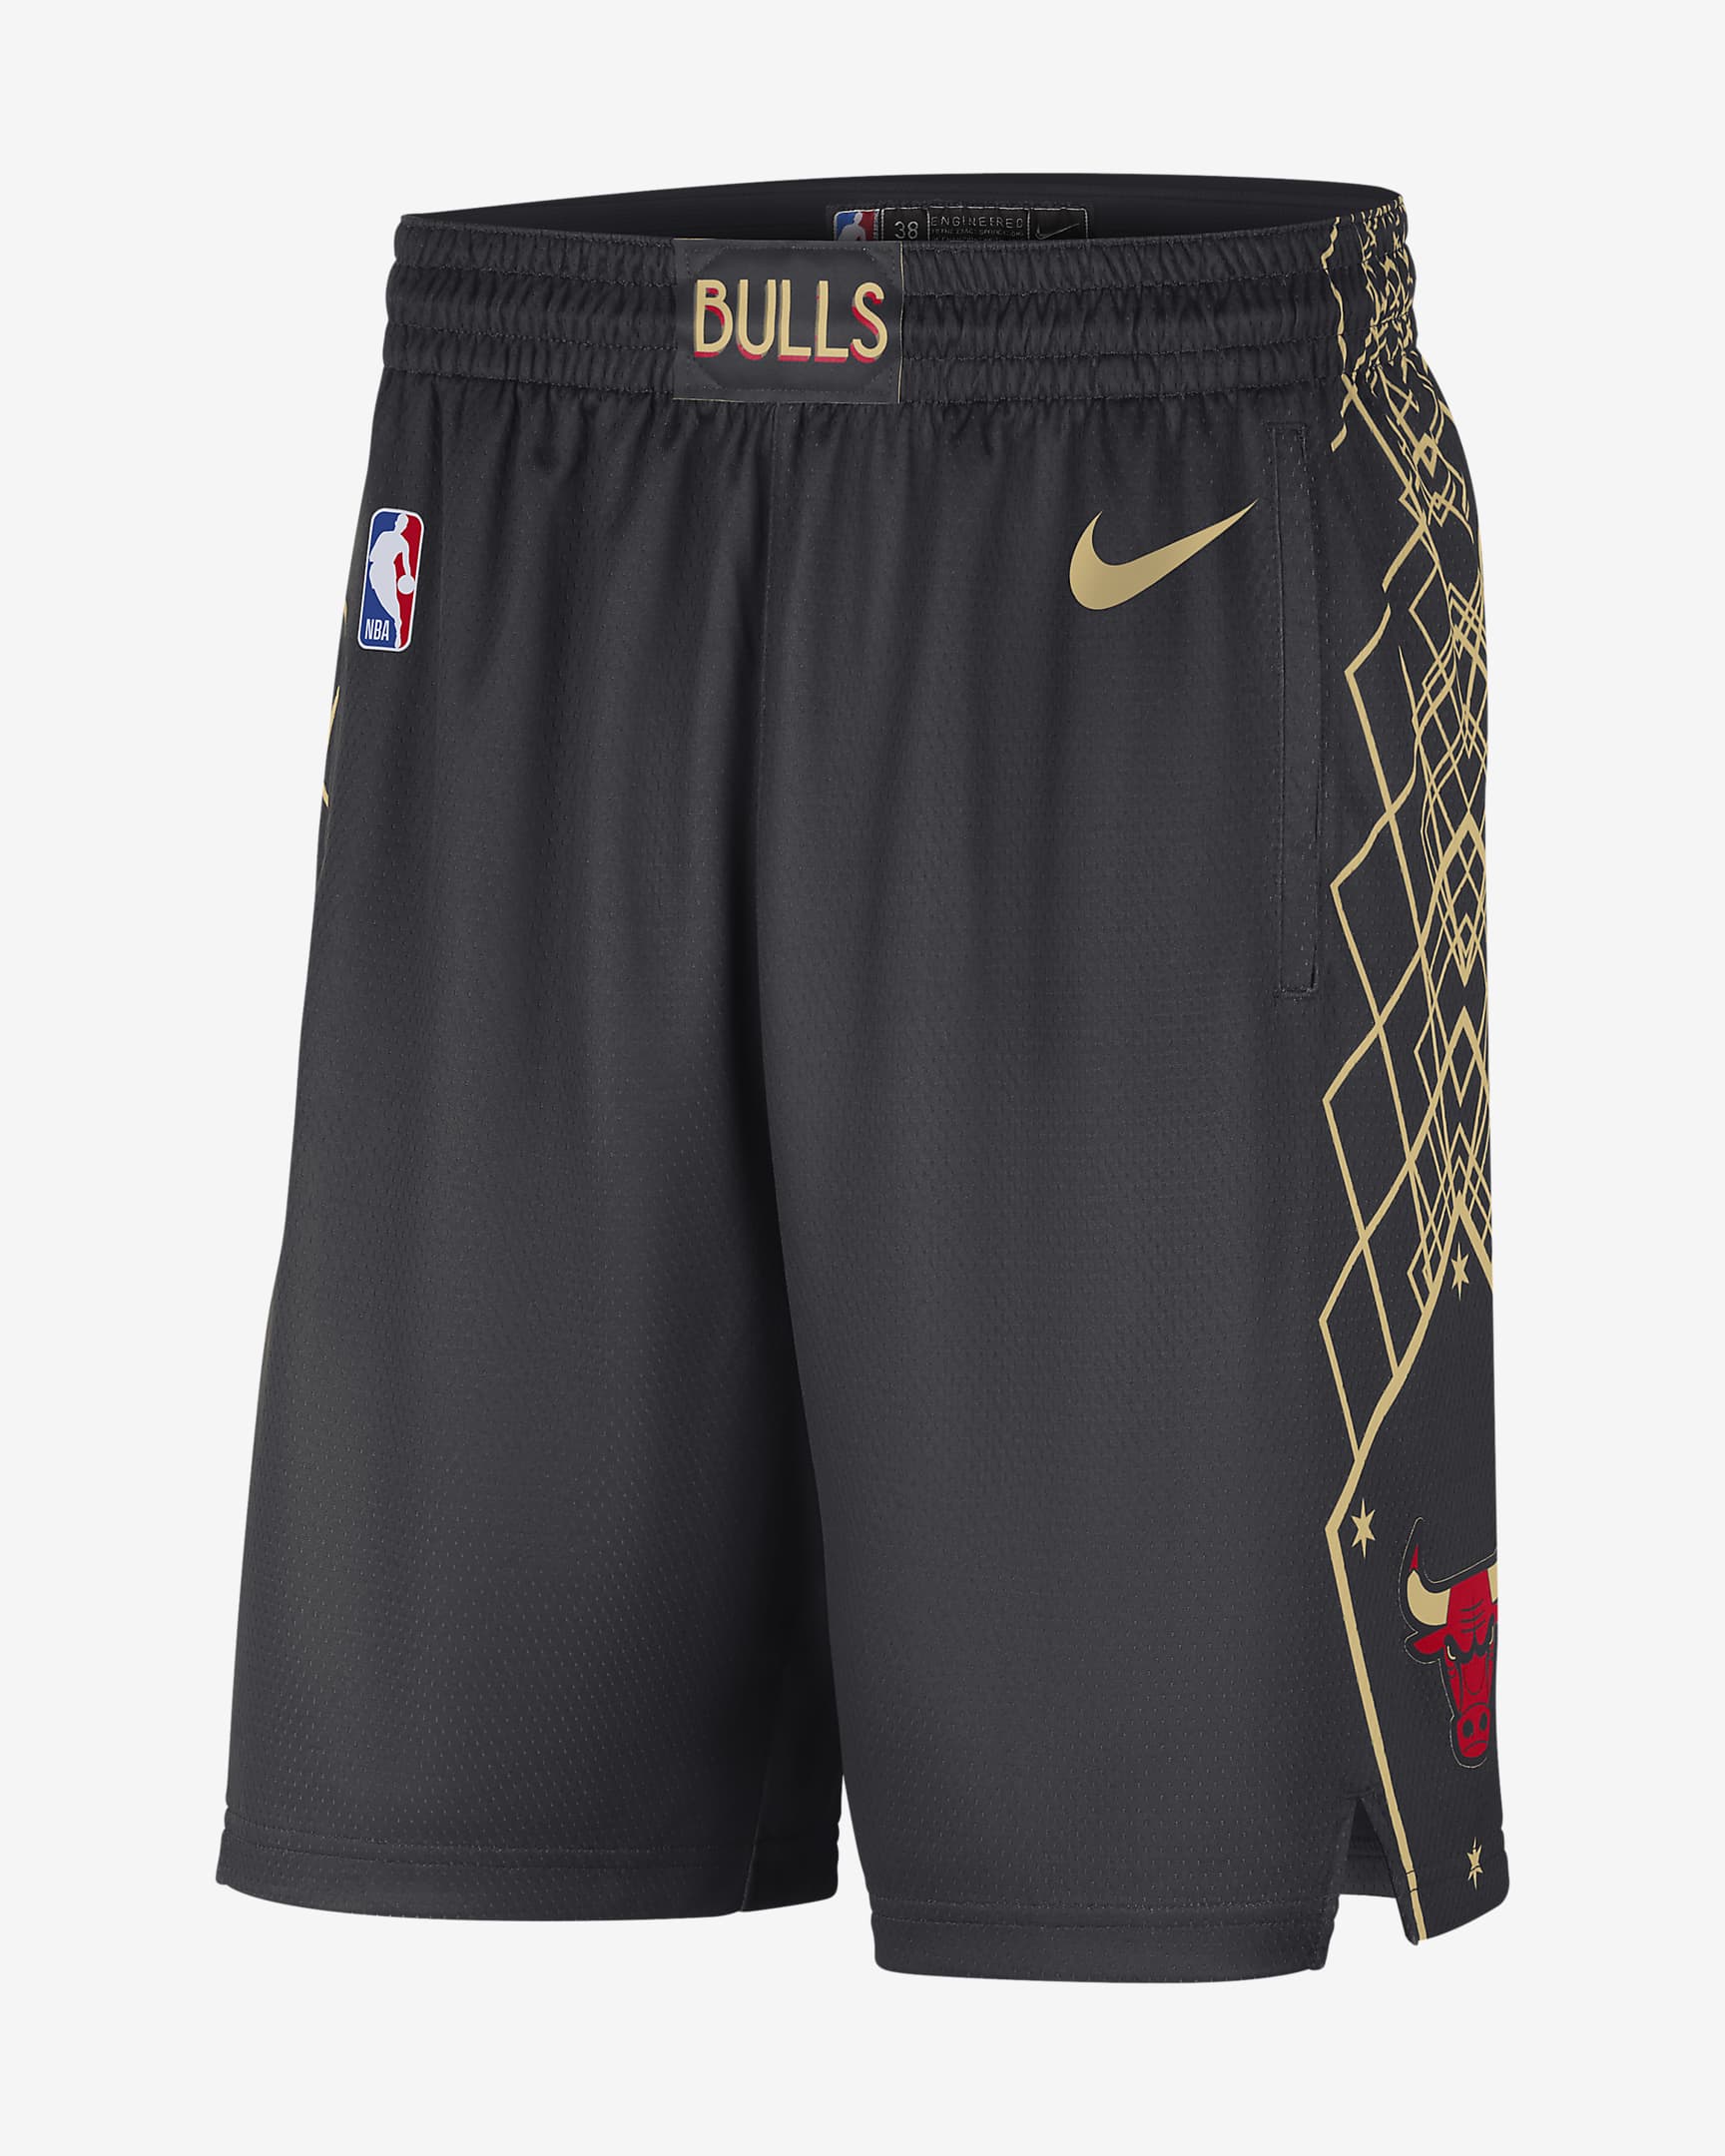 Shorts Nike NBA Swingman para hombre Chicago Bulls City Edition 2020 ...